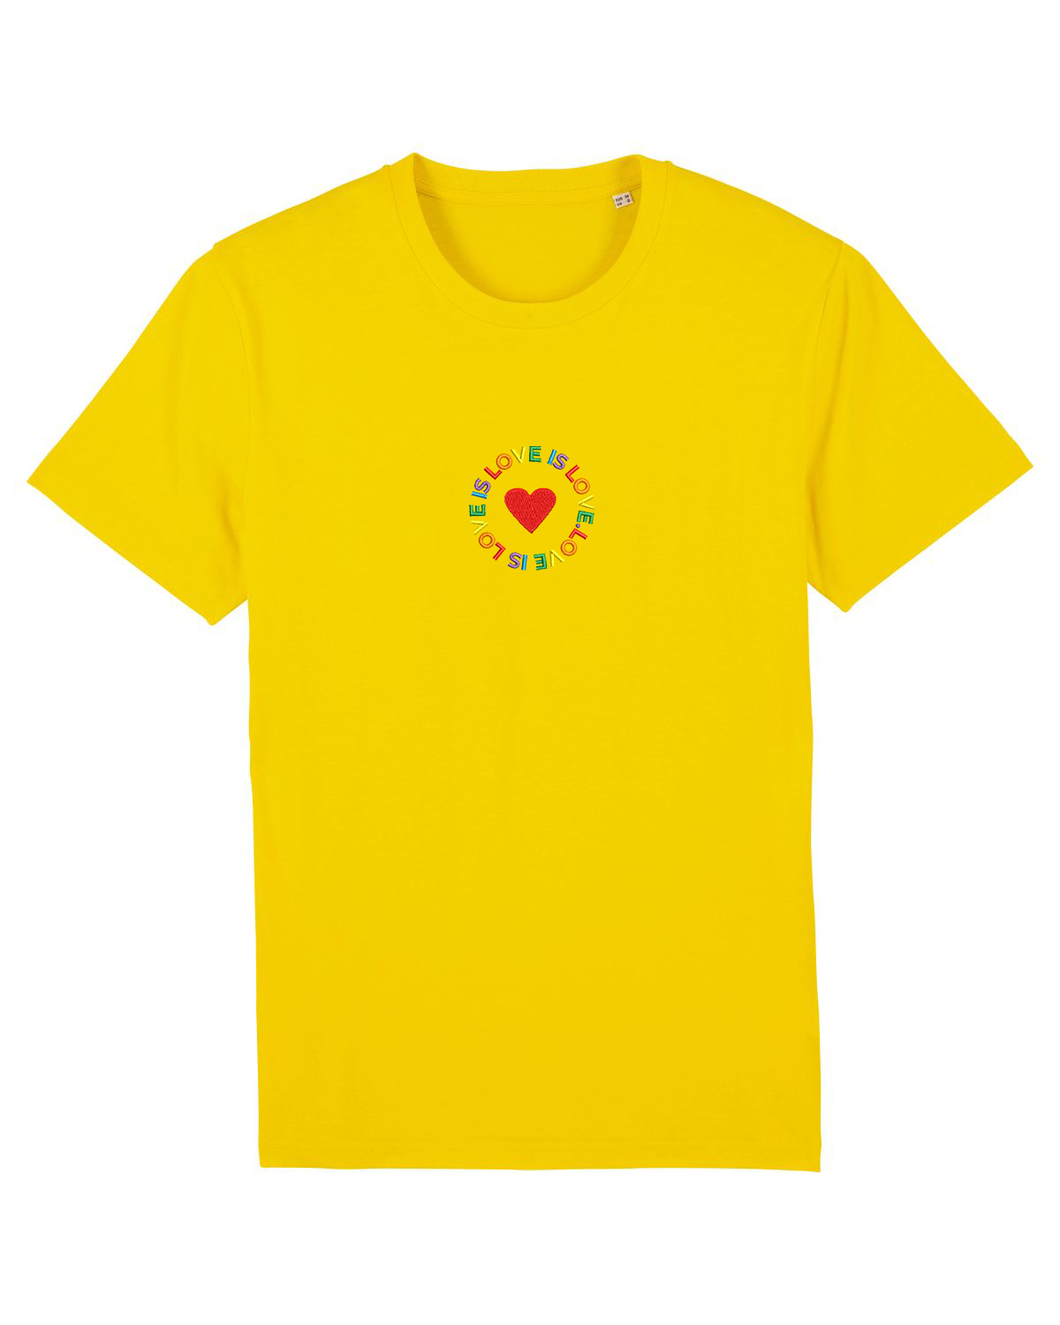 LOVEISLOVE❤️ - organic cotton embroidered unisex T-shirt